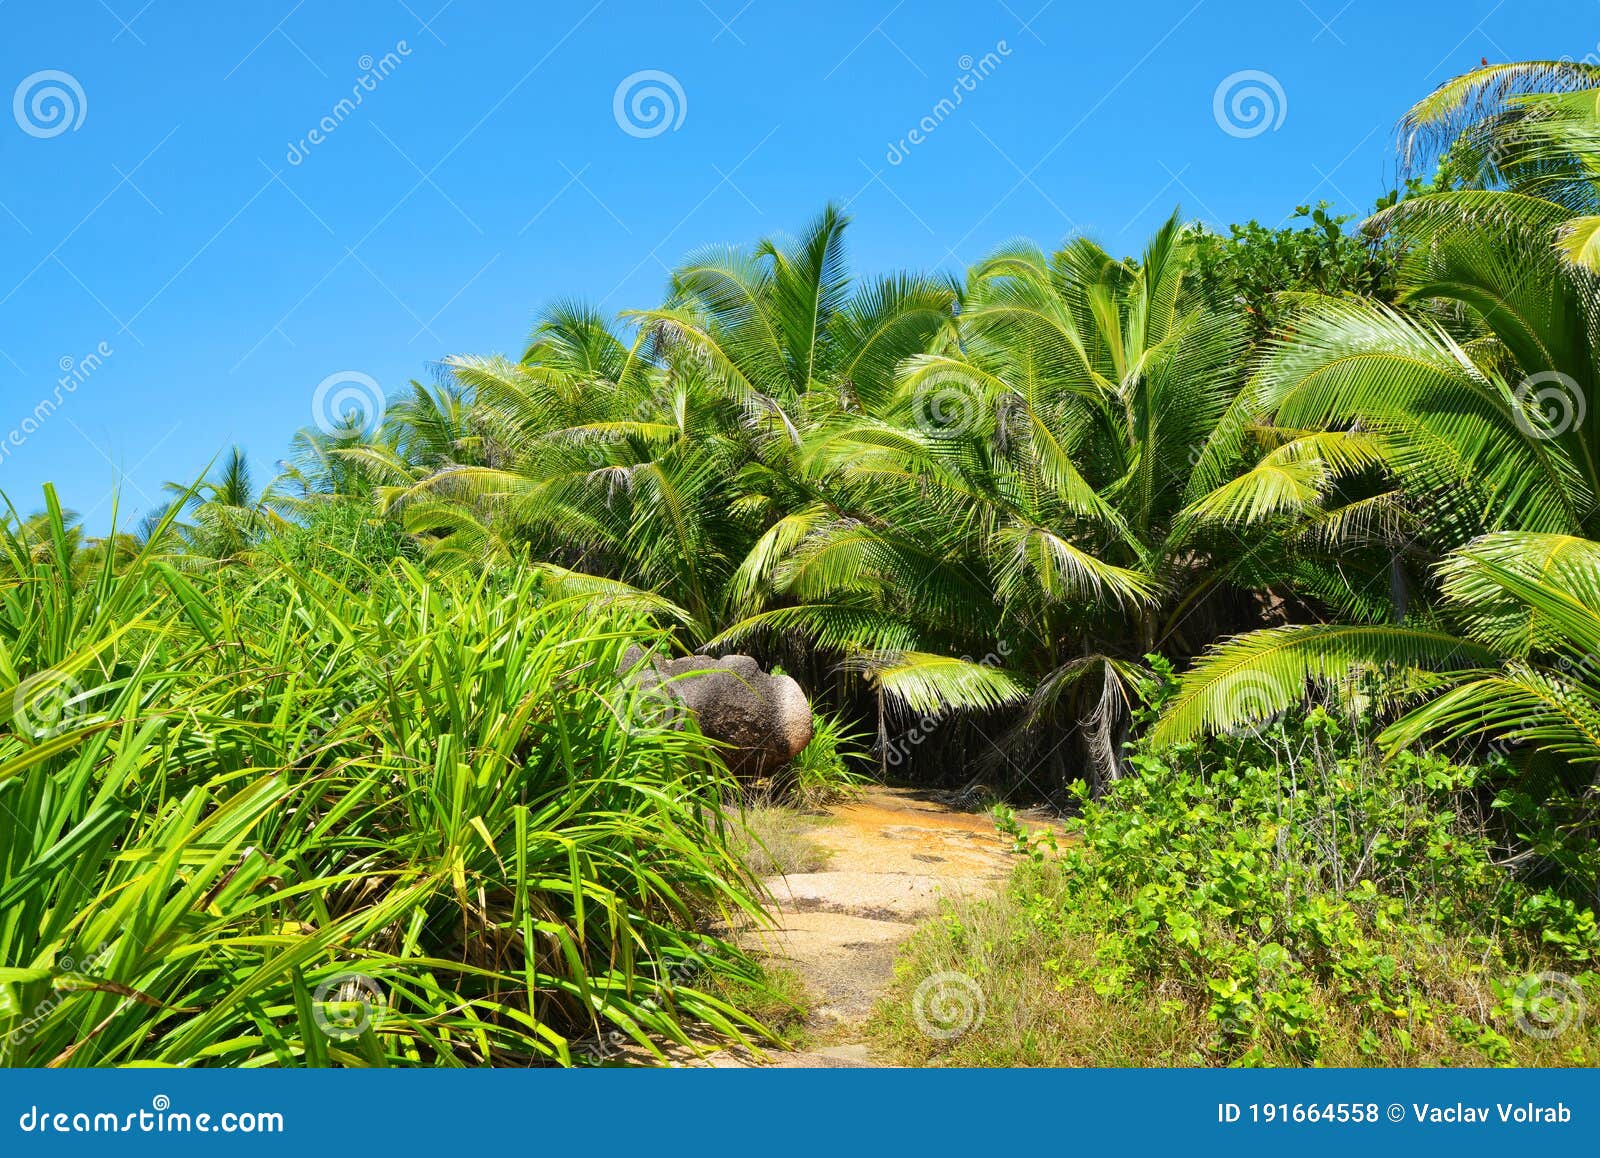 tropical landscape with coconut palm trees near anse marron beach on la digue island,seychelles.